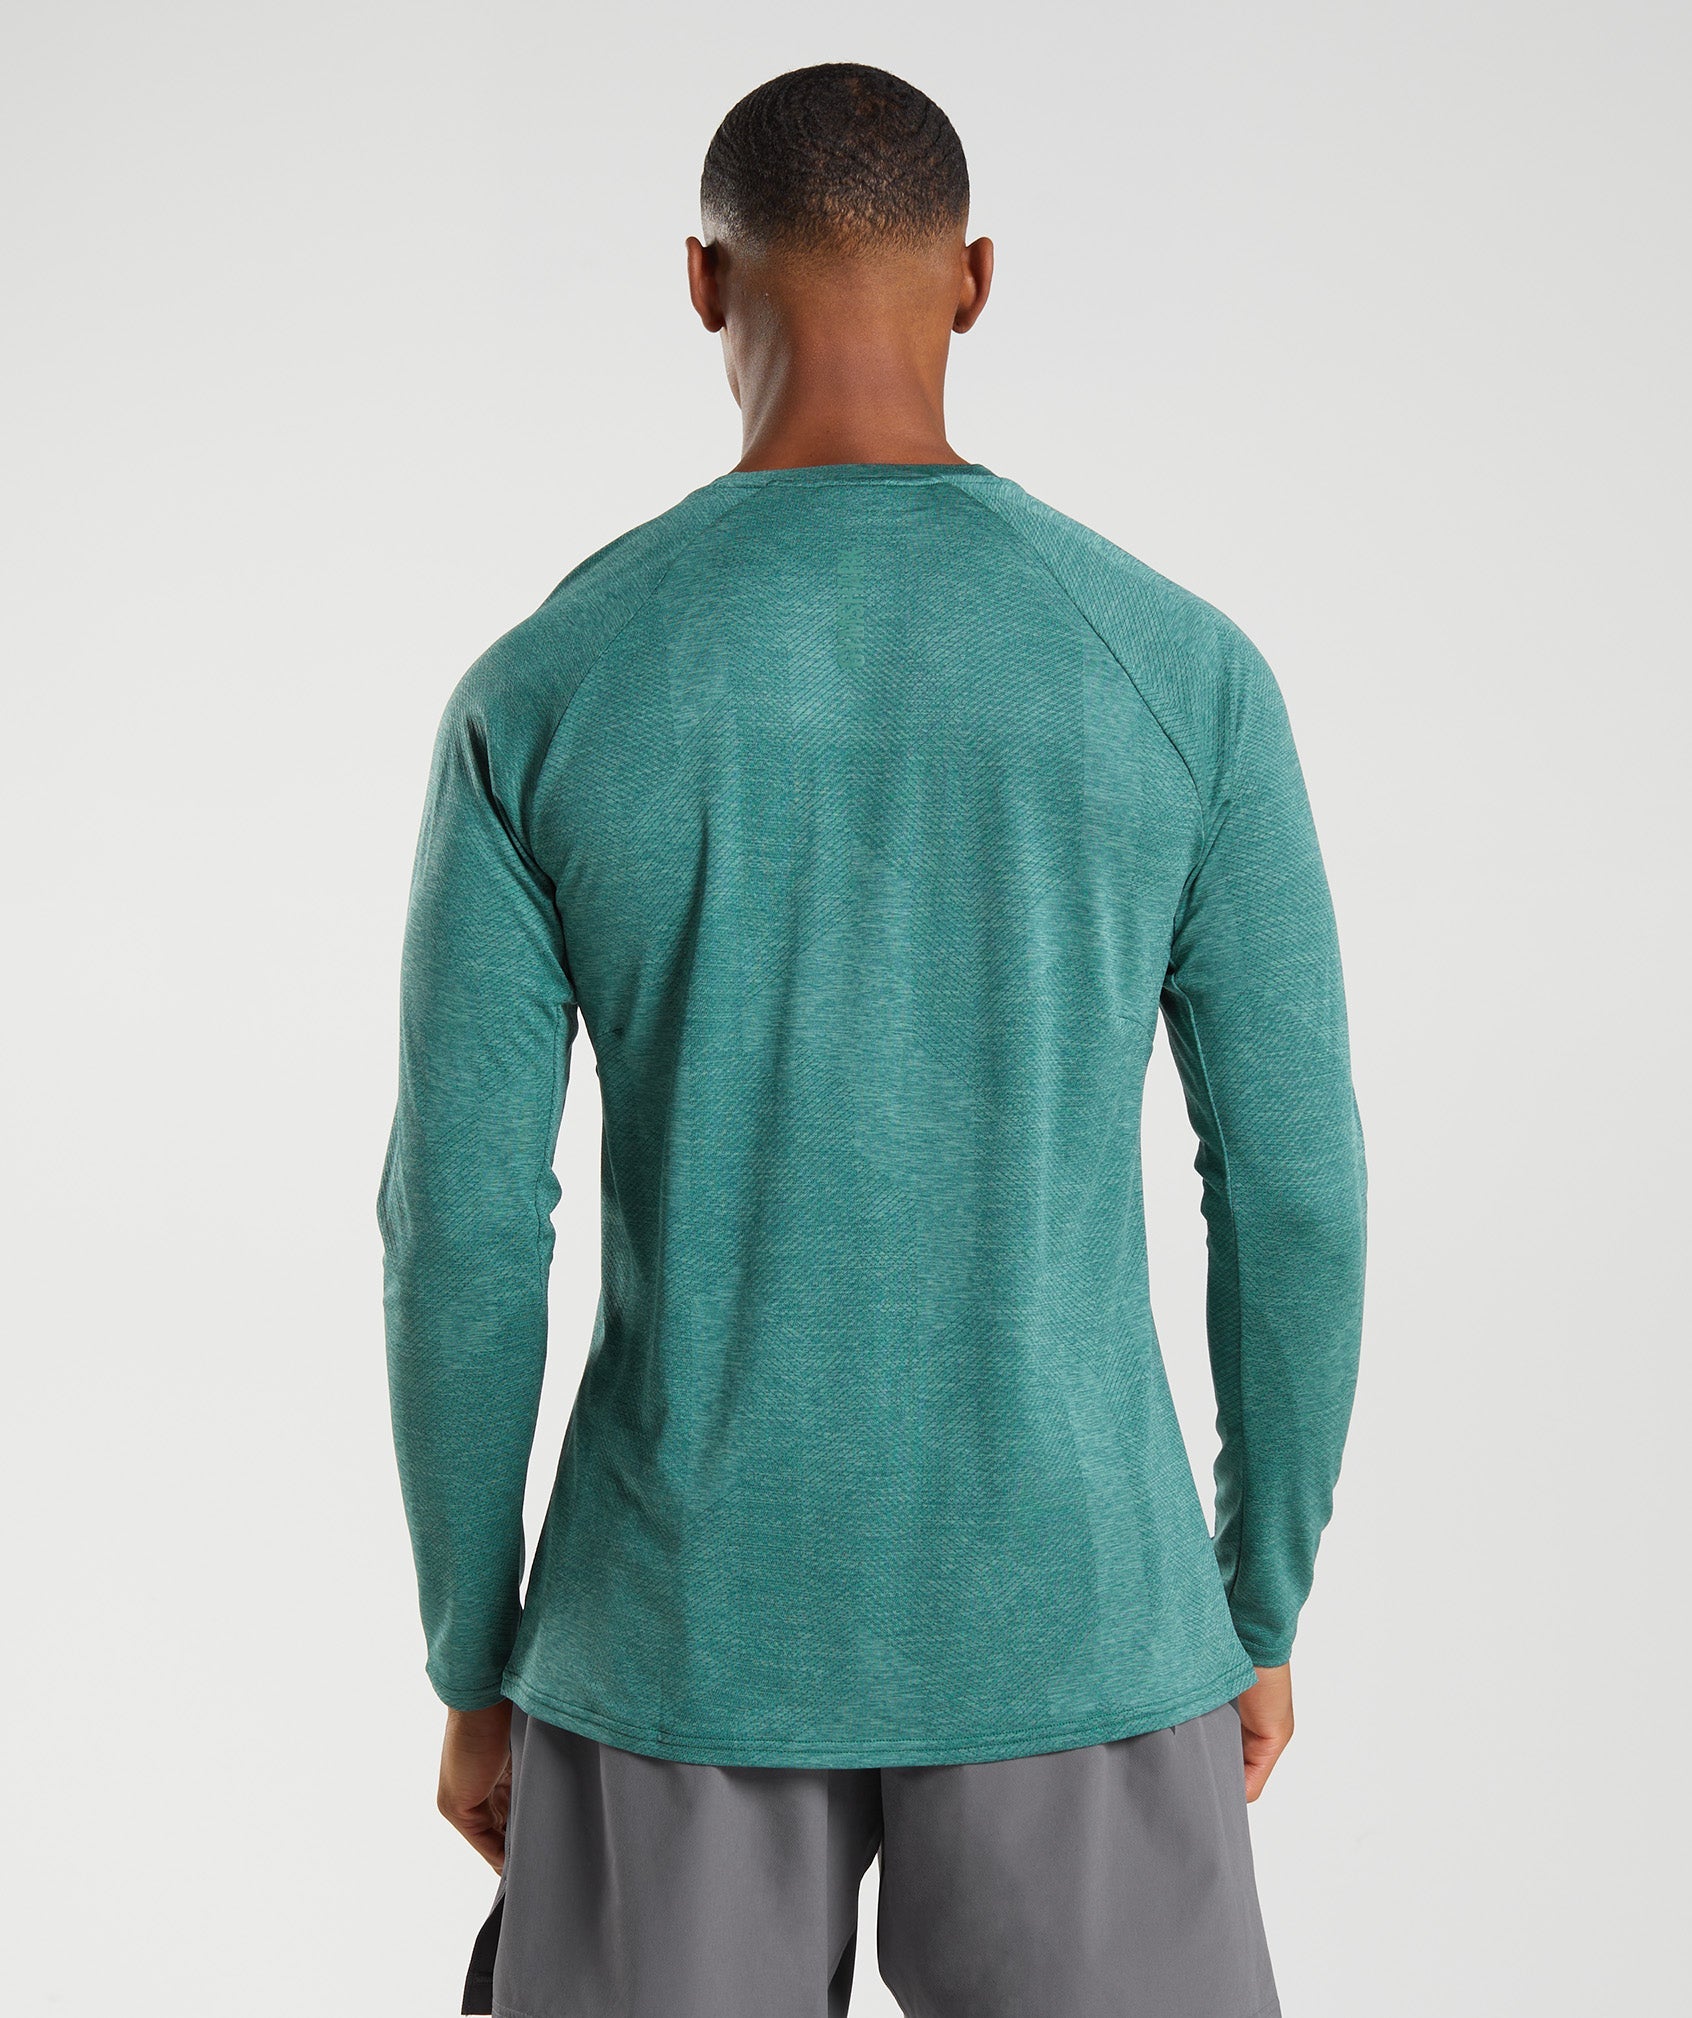 Apex Long Sleeve T-Shirt in Woodland Green/Hoya Green - view 2